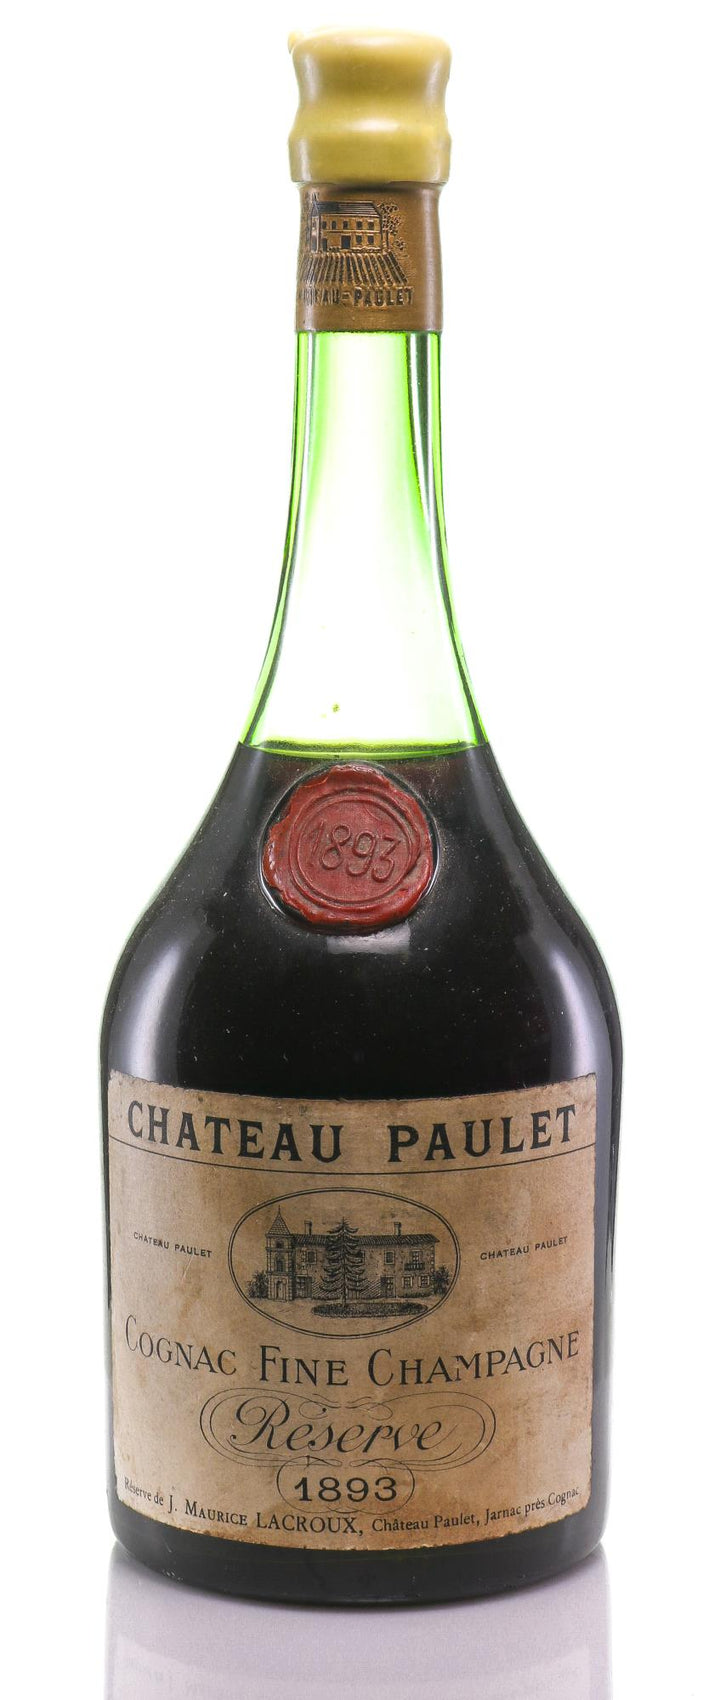 1893 Chateau Paulet Cognac, Fine Champagne Reserve - Rue Pinard